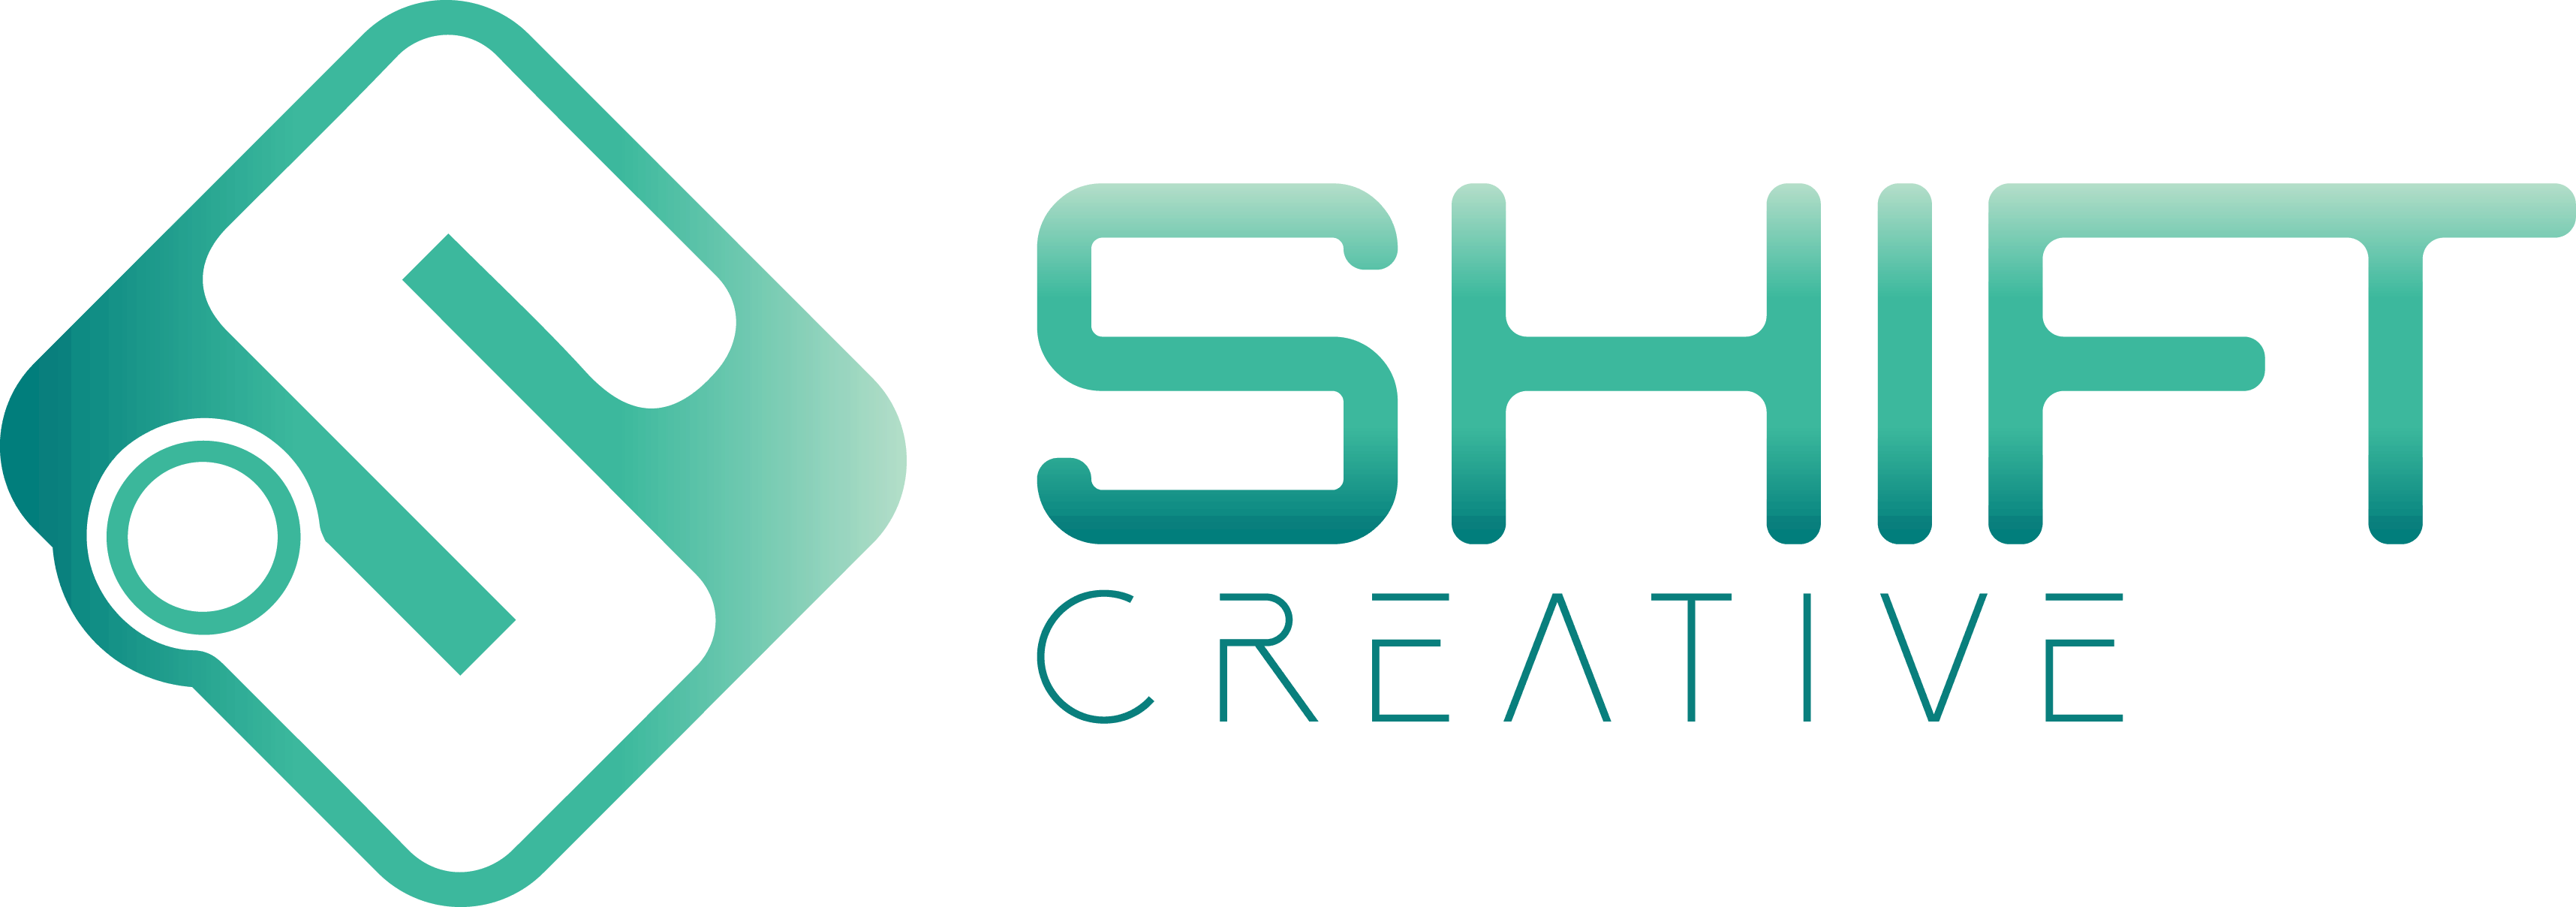 Shift Creative Solutions Inc.